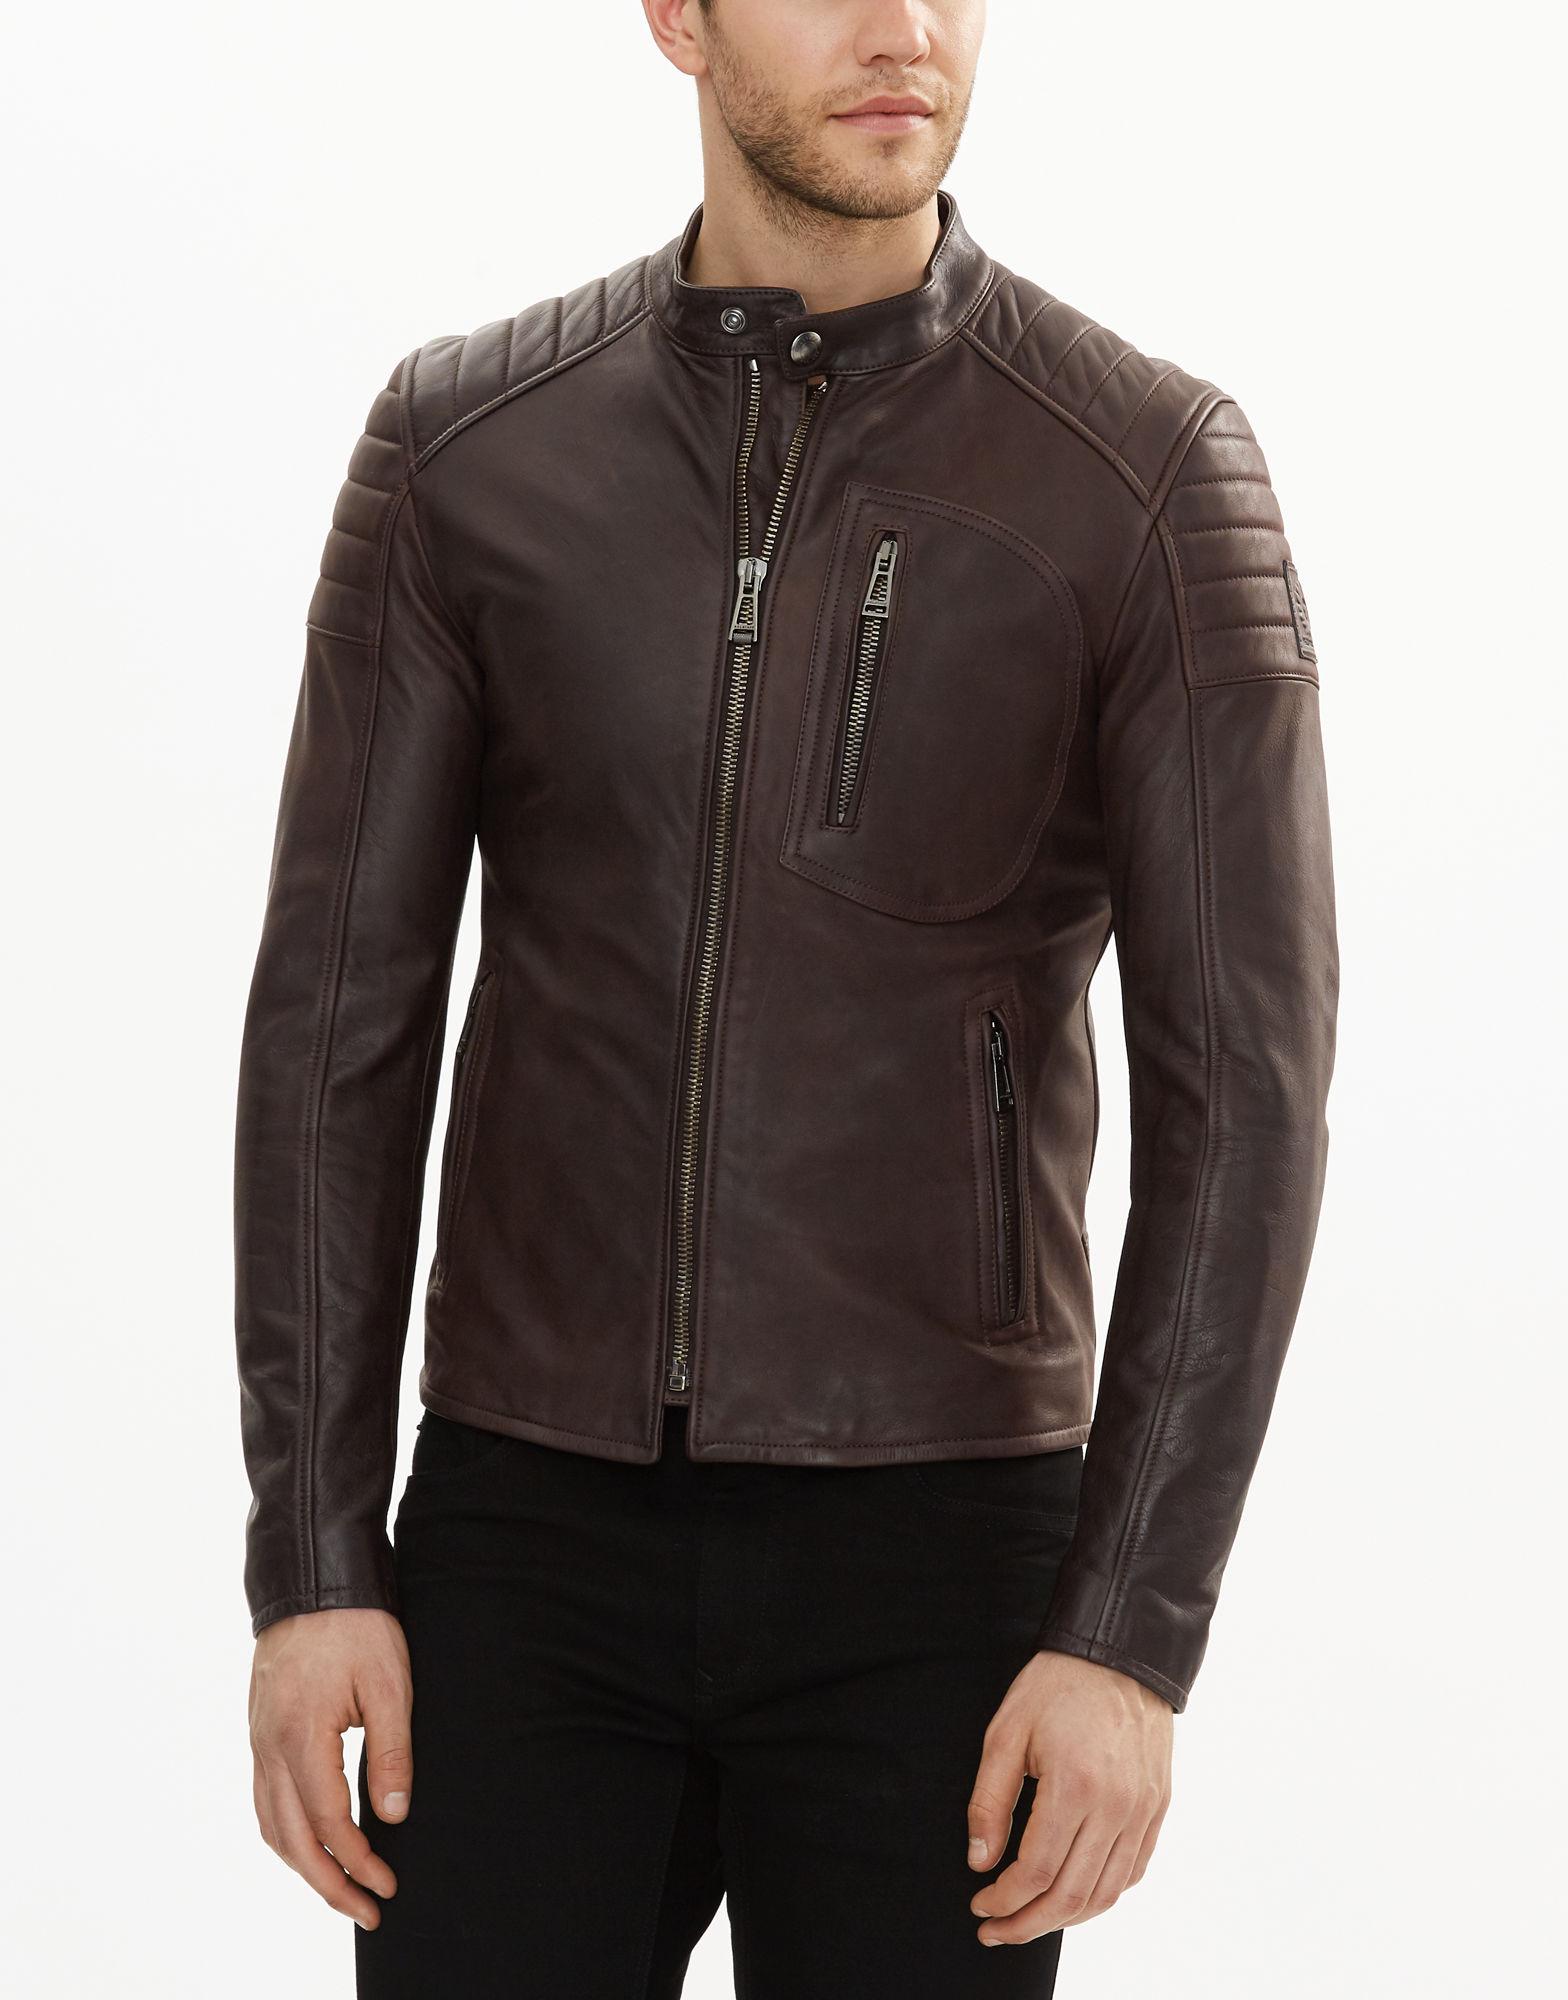 Belstaff Leather Wittering Blouson Jacket in Black Brown (Black) for Men -  Lyst